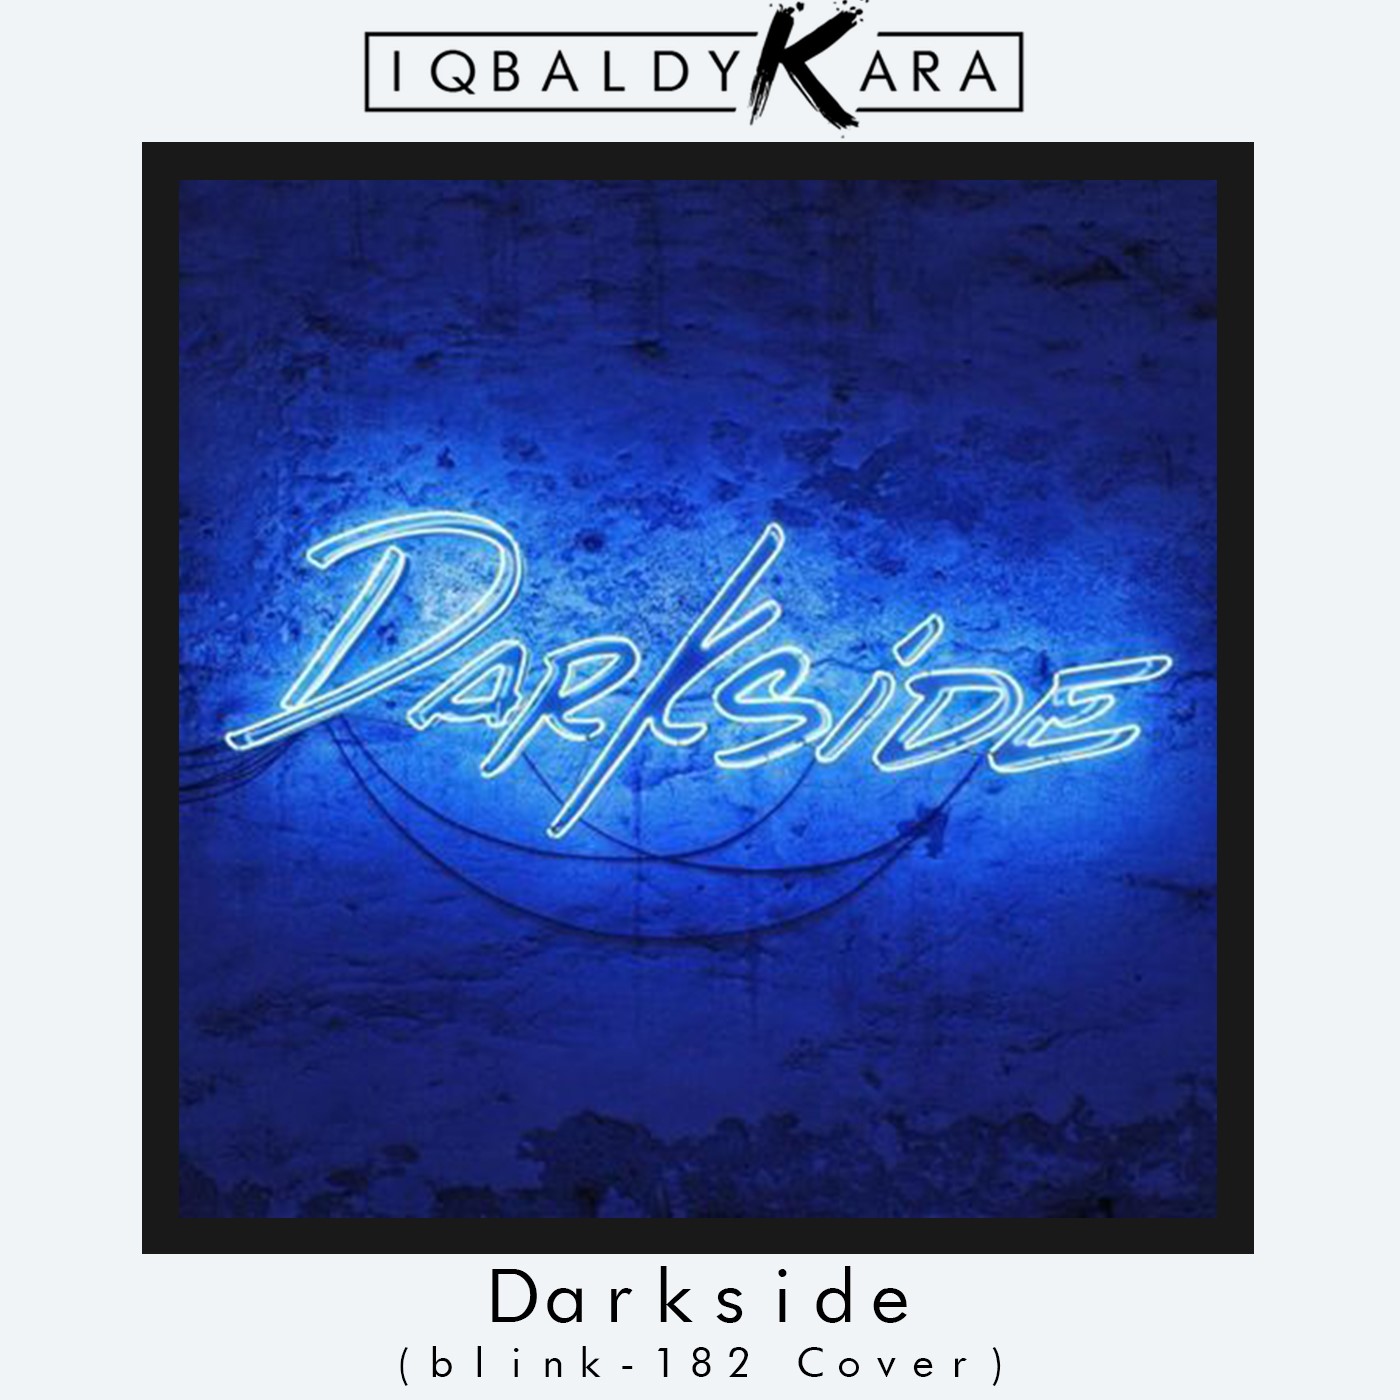 Shkarko Darkside (blink-182 Cover)